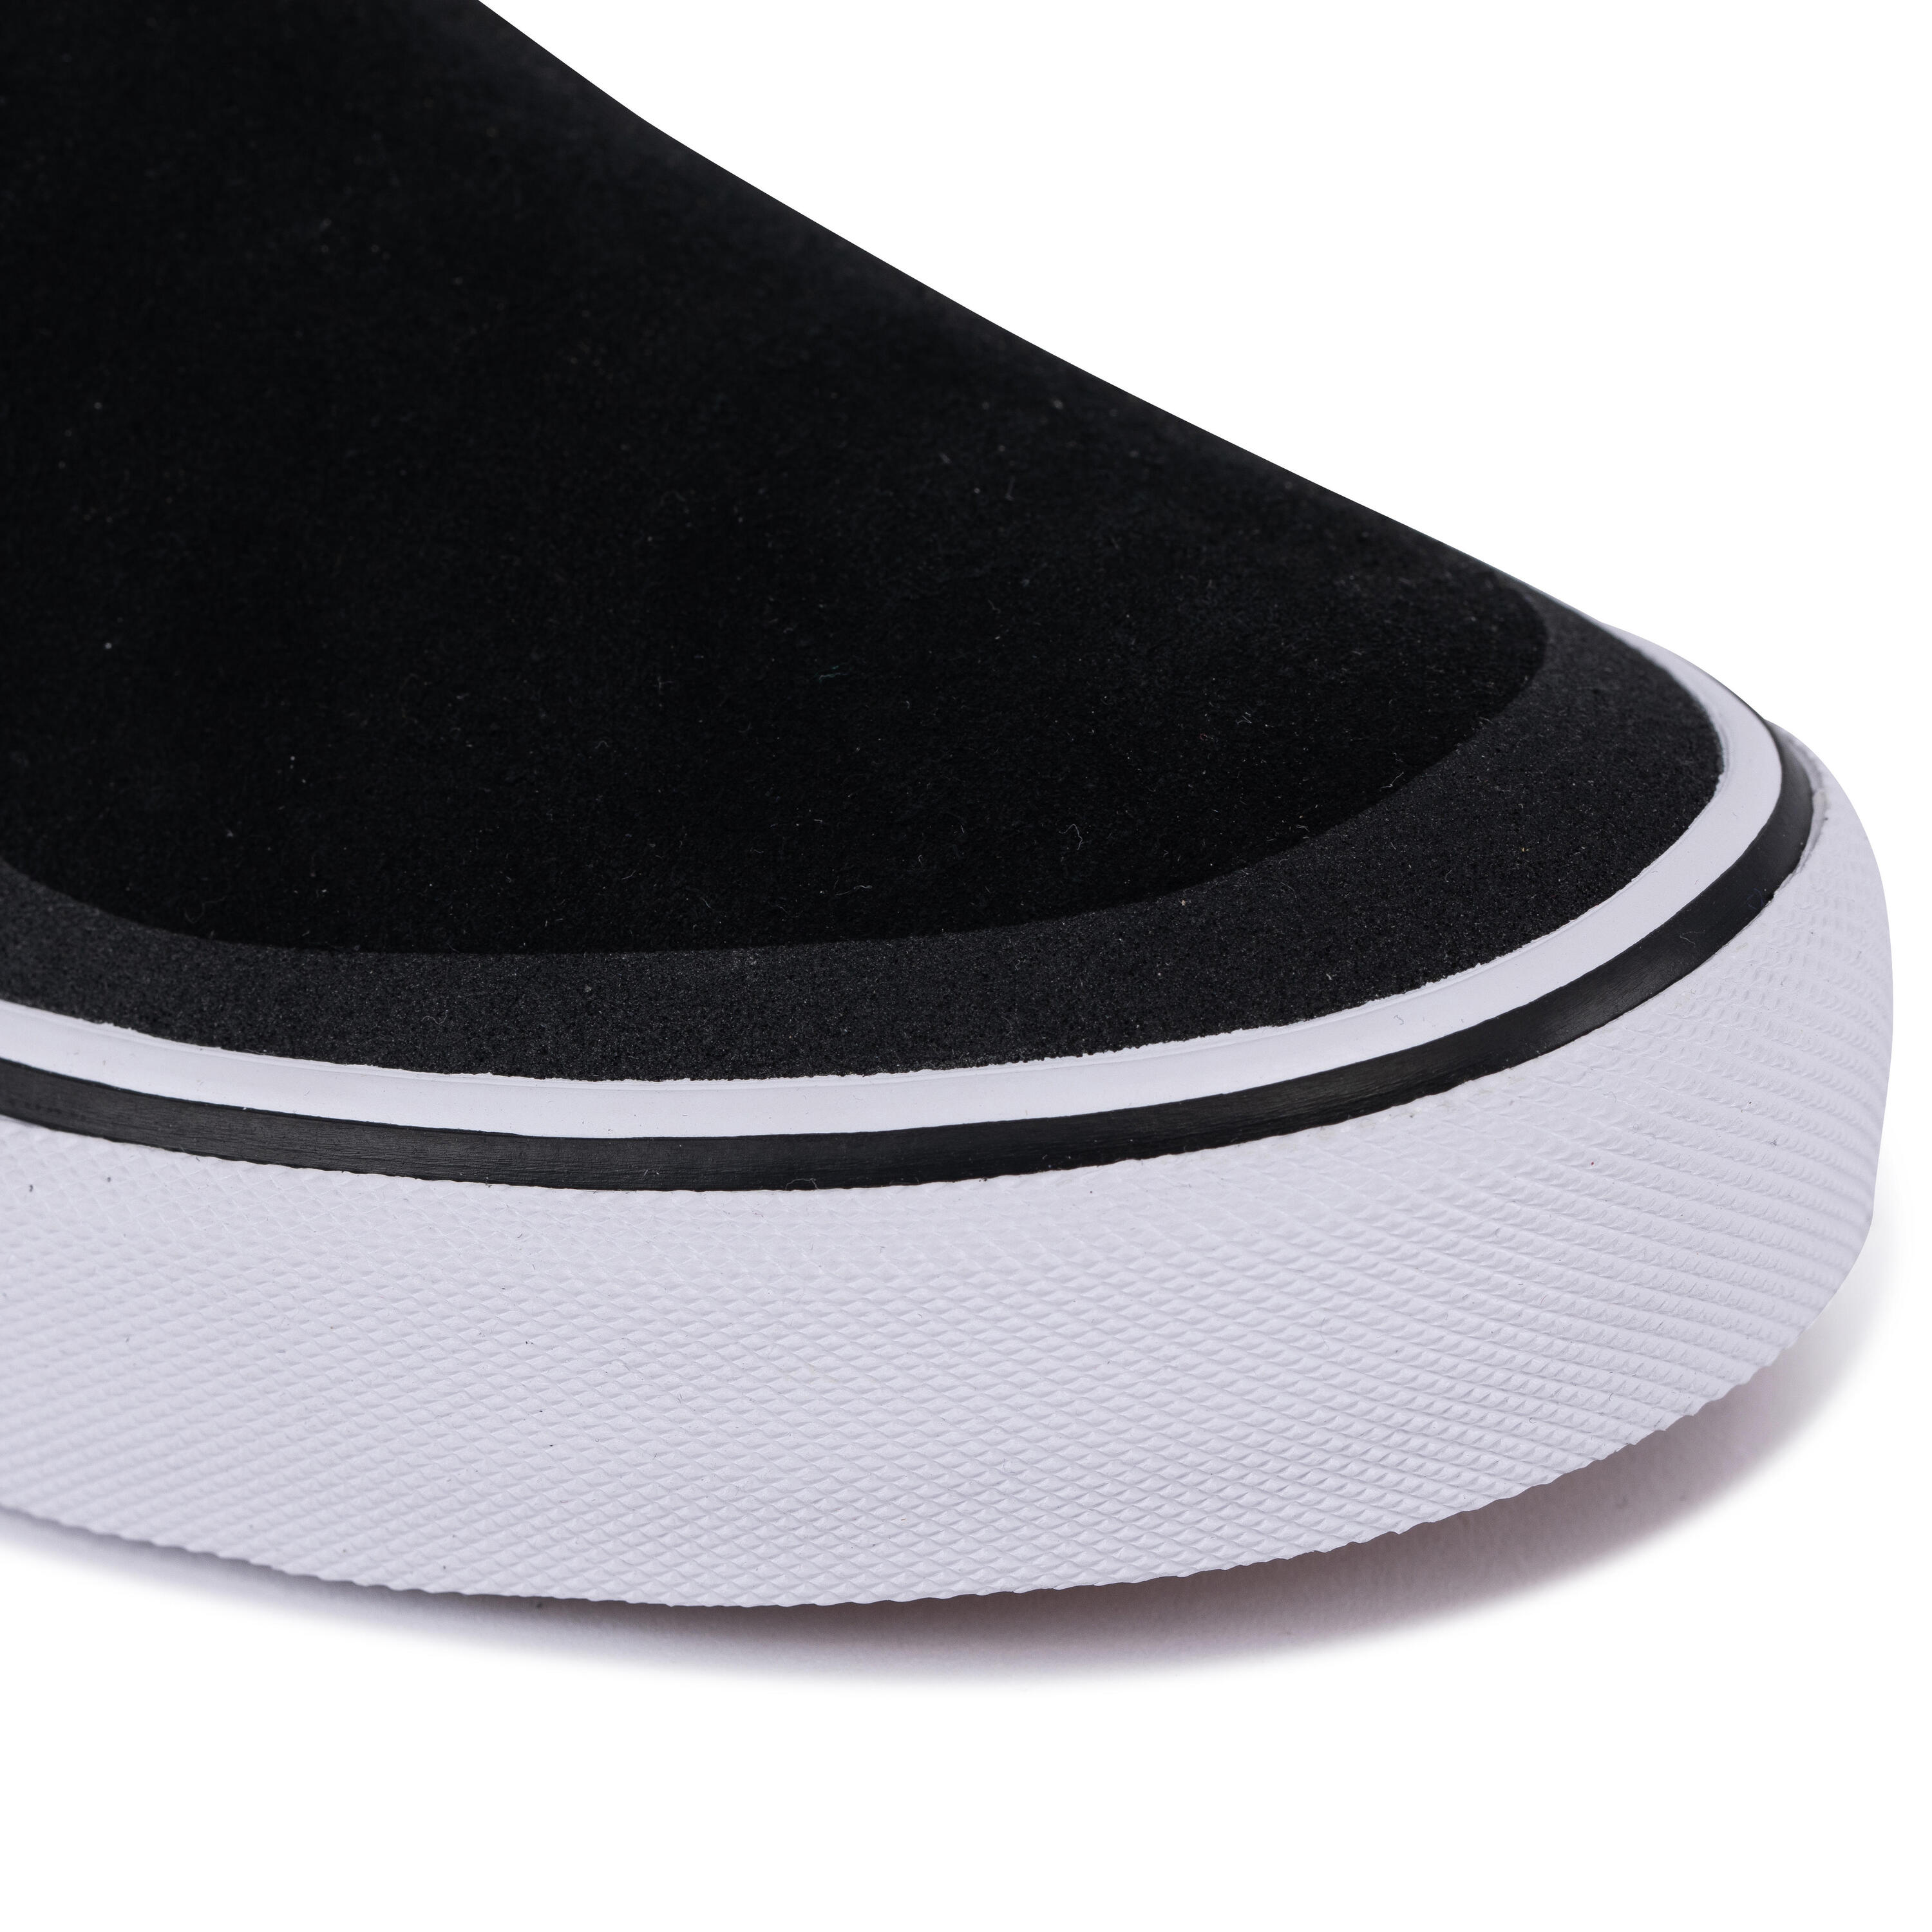 Vulca 500 Adult Low-Top Slip-On Skate Shoes - Black/White 6/12